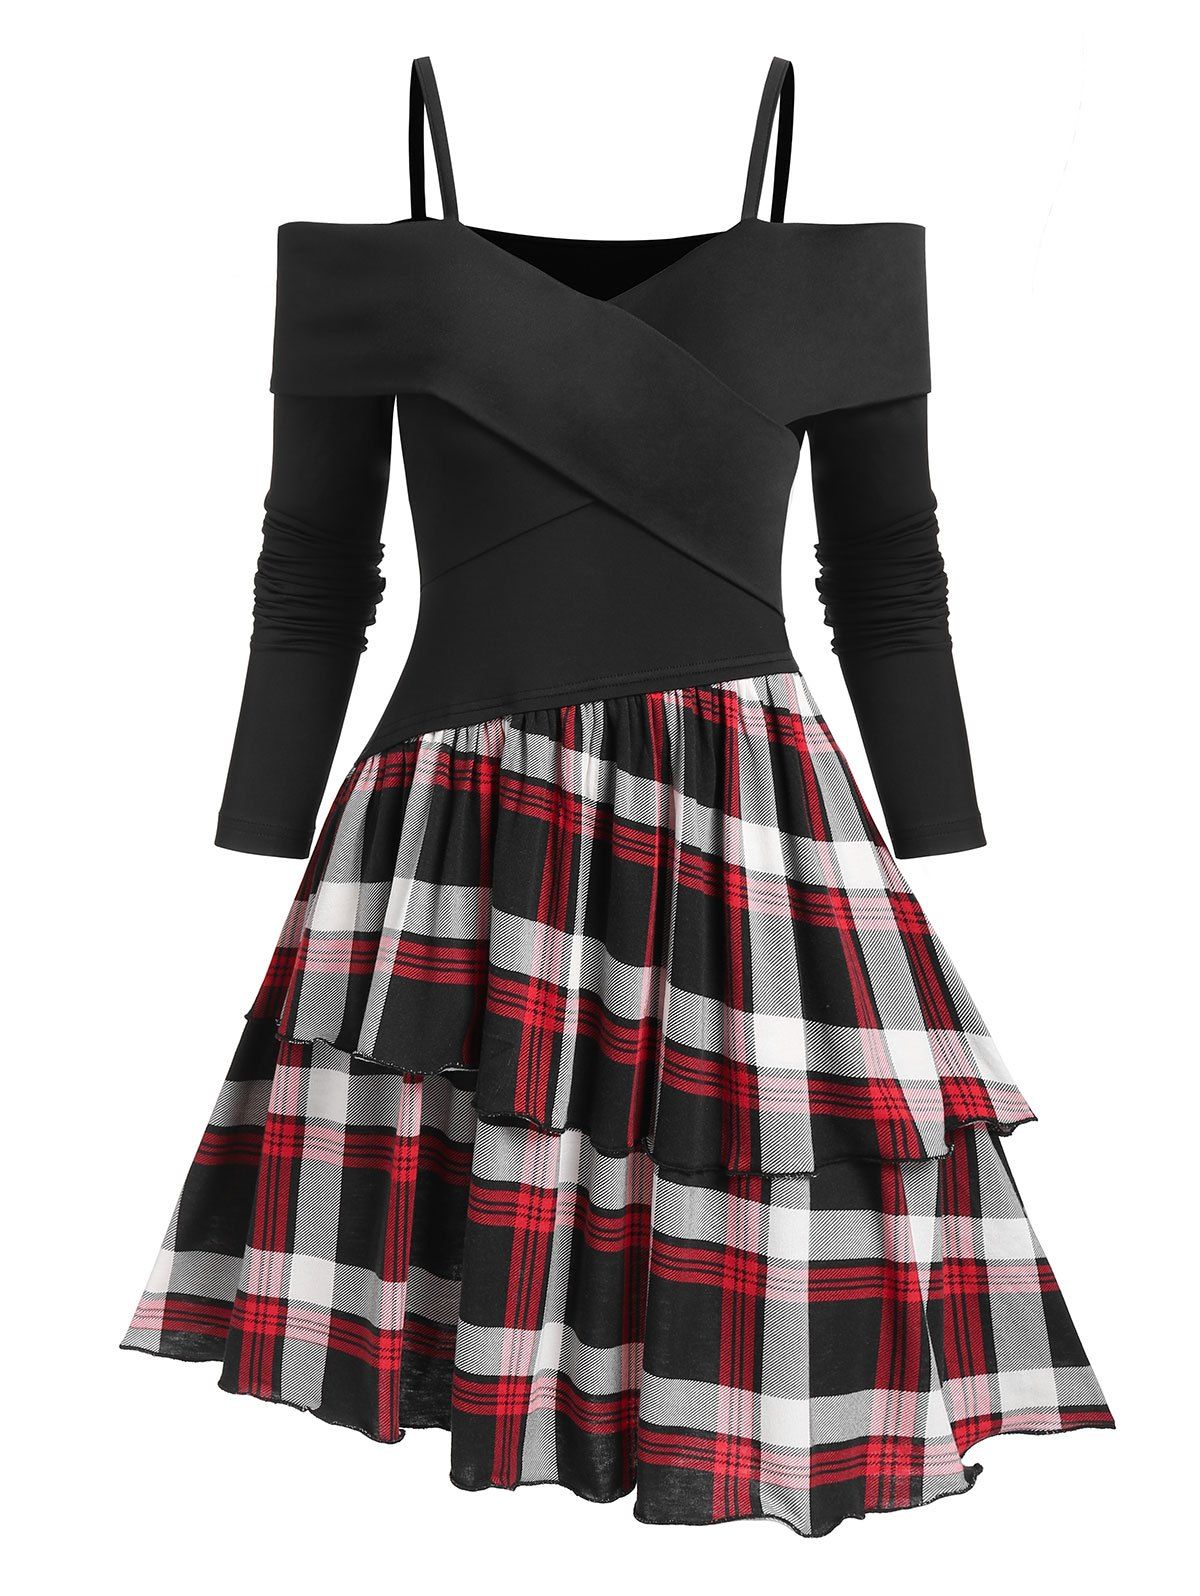 Crossover Plaid Layered Asymmetrical Flare Dress - BLACK XL